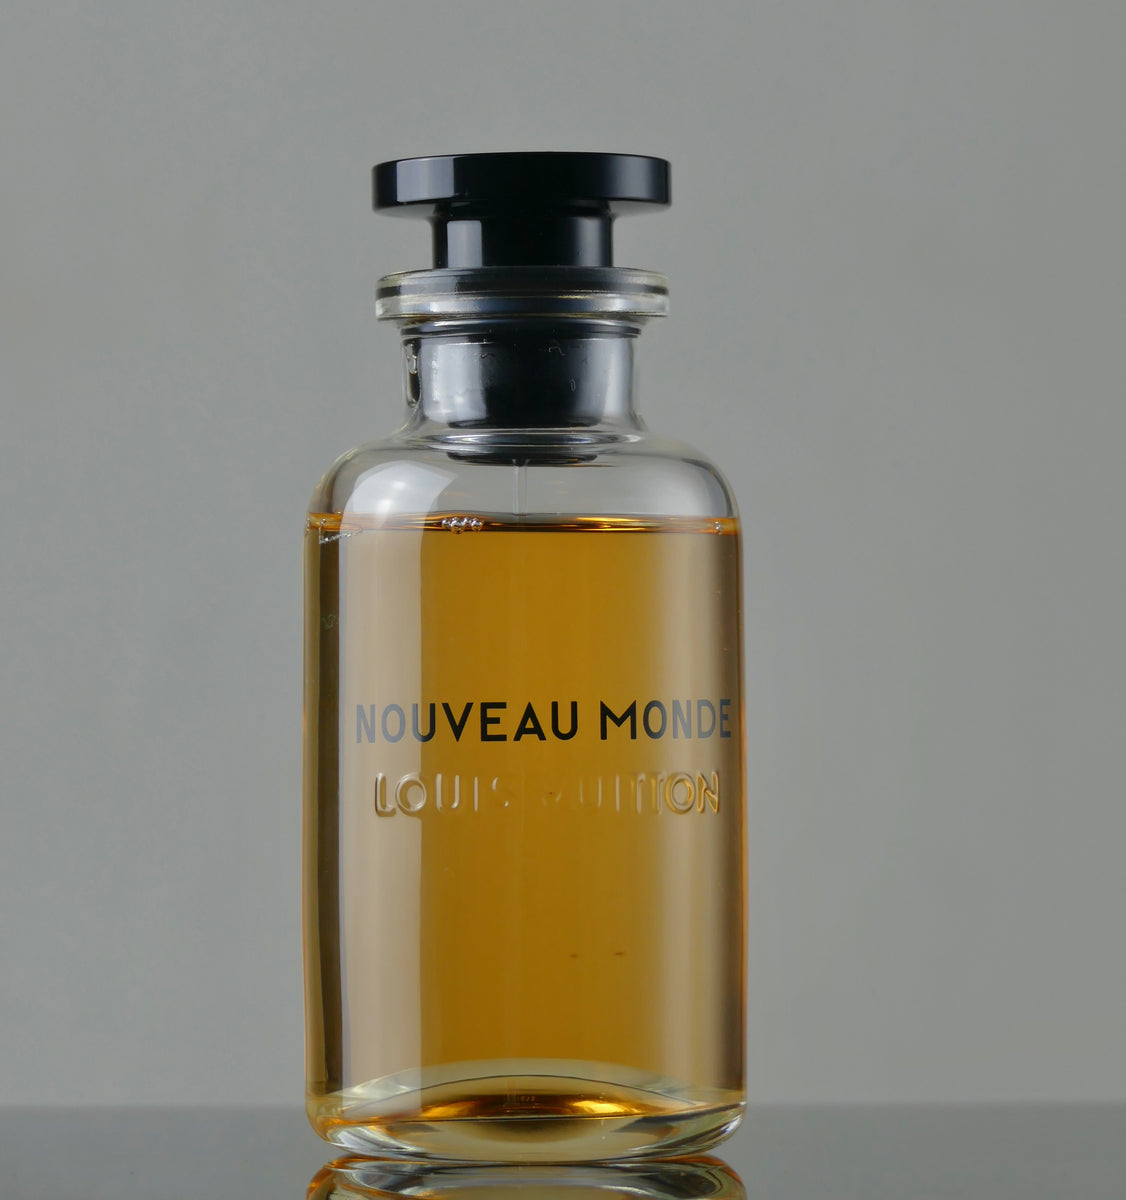 Louis Vuitton Nouveau Monde | Perfume Sample | Fragrance Sample